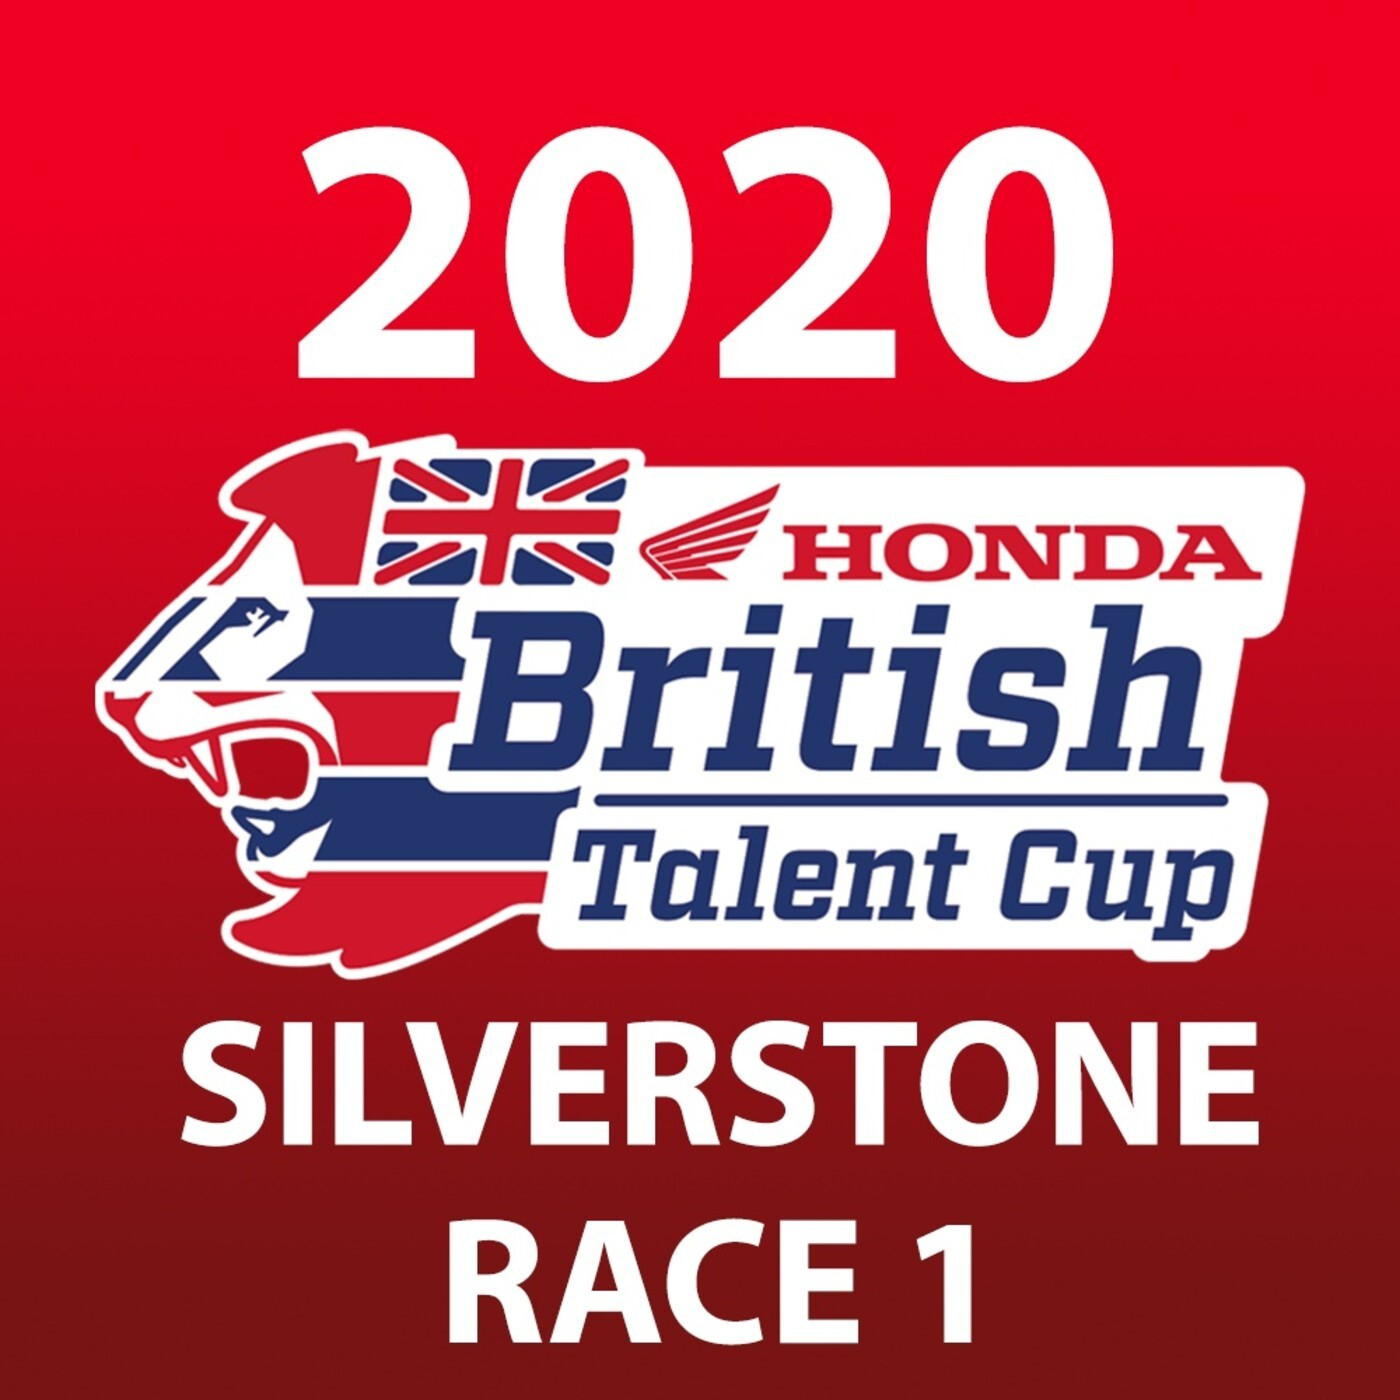 Honda British Talent Cup - Silverstone 2020 Race 1